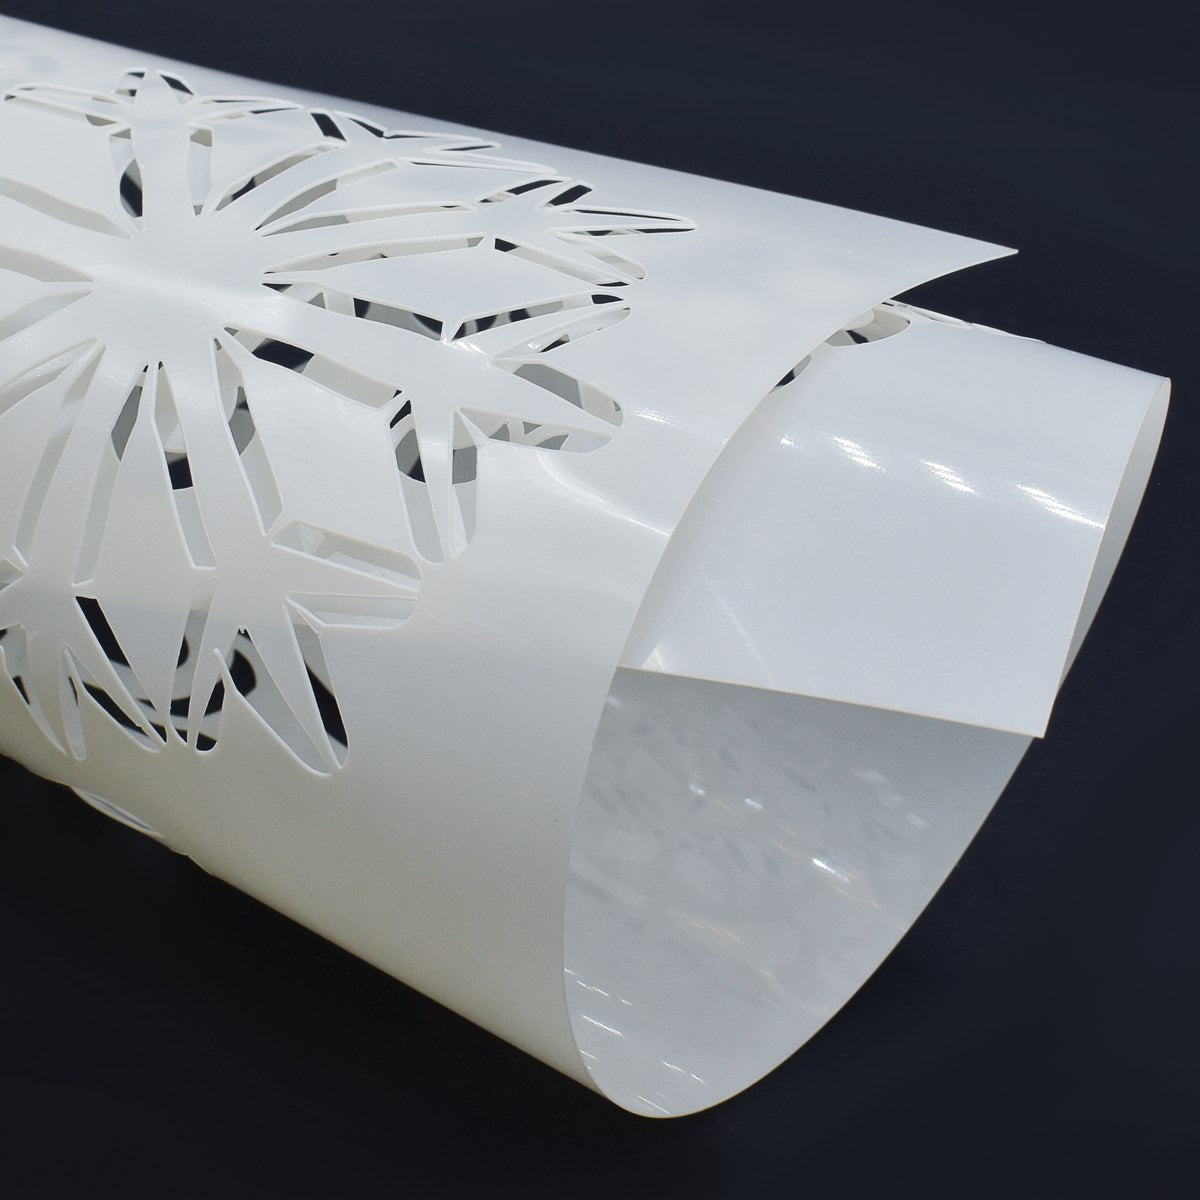 jags-mumbai Stencil Winter Wonderland: Stencil Plastic A4 size 5 Snowflake Design for Festive Crafts